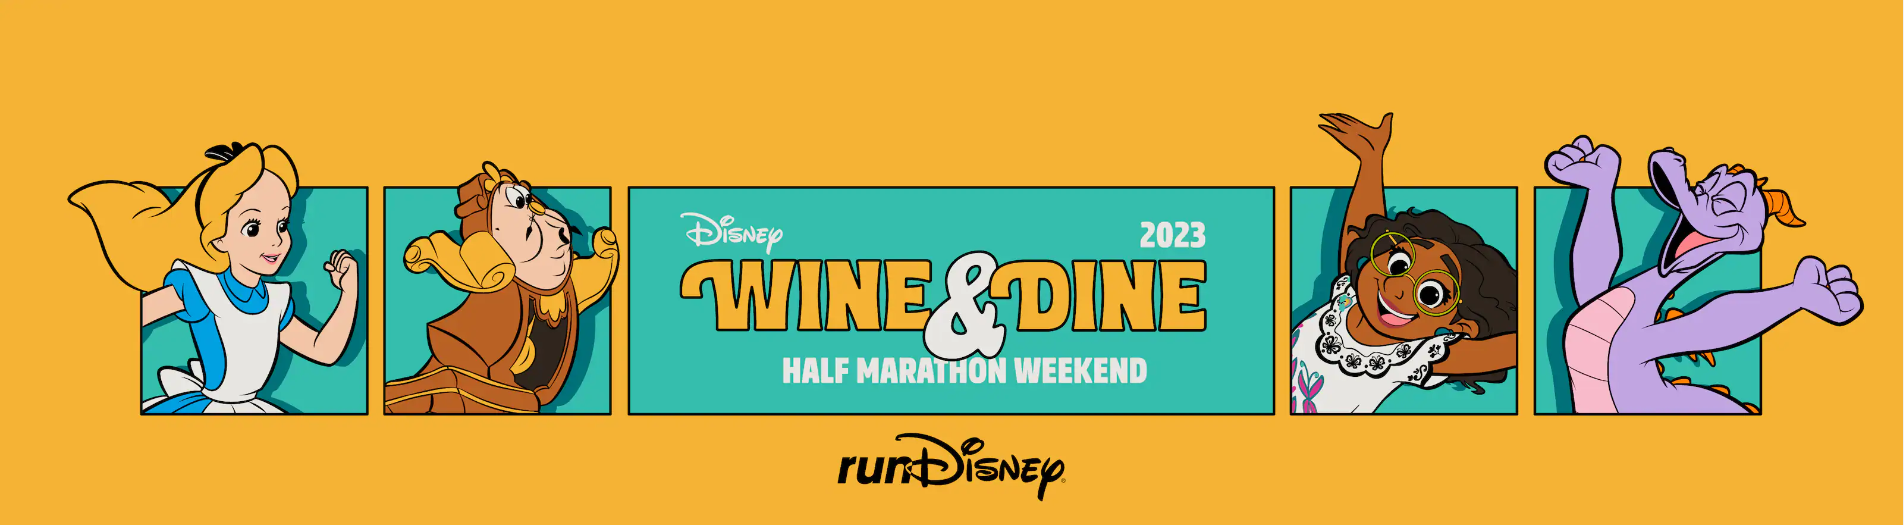 Disney wine and dine 2023 banner